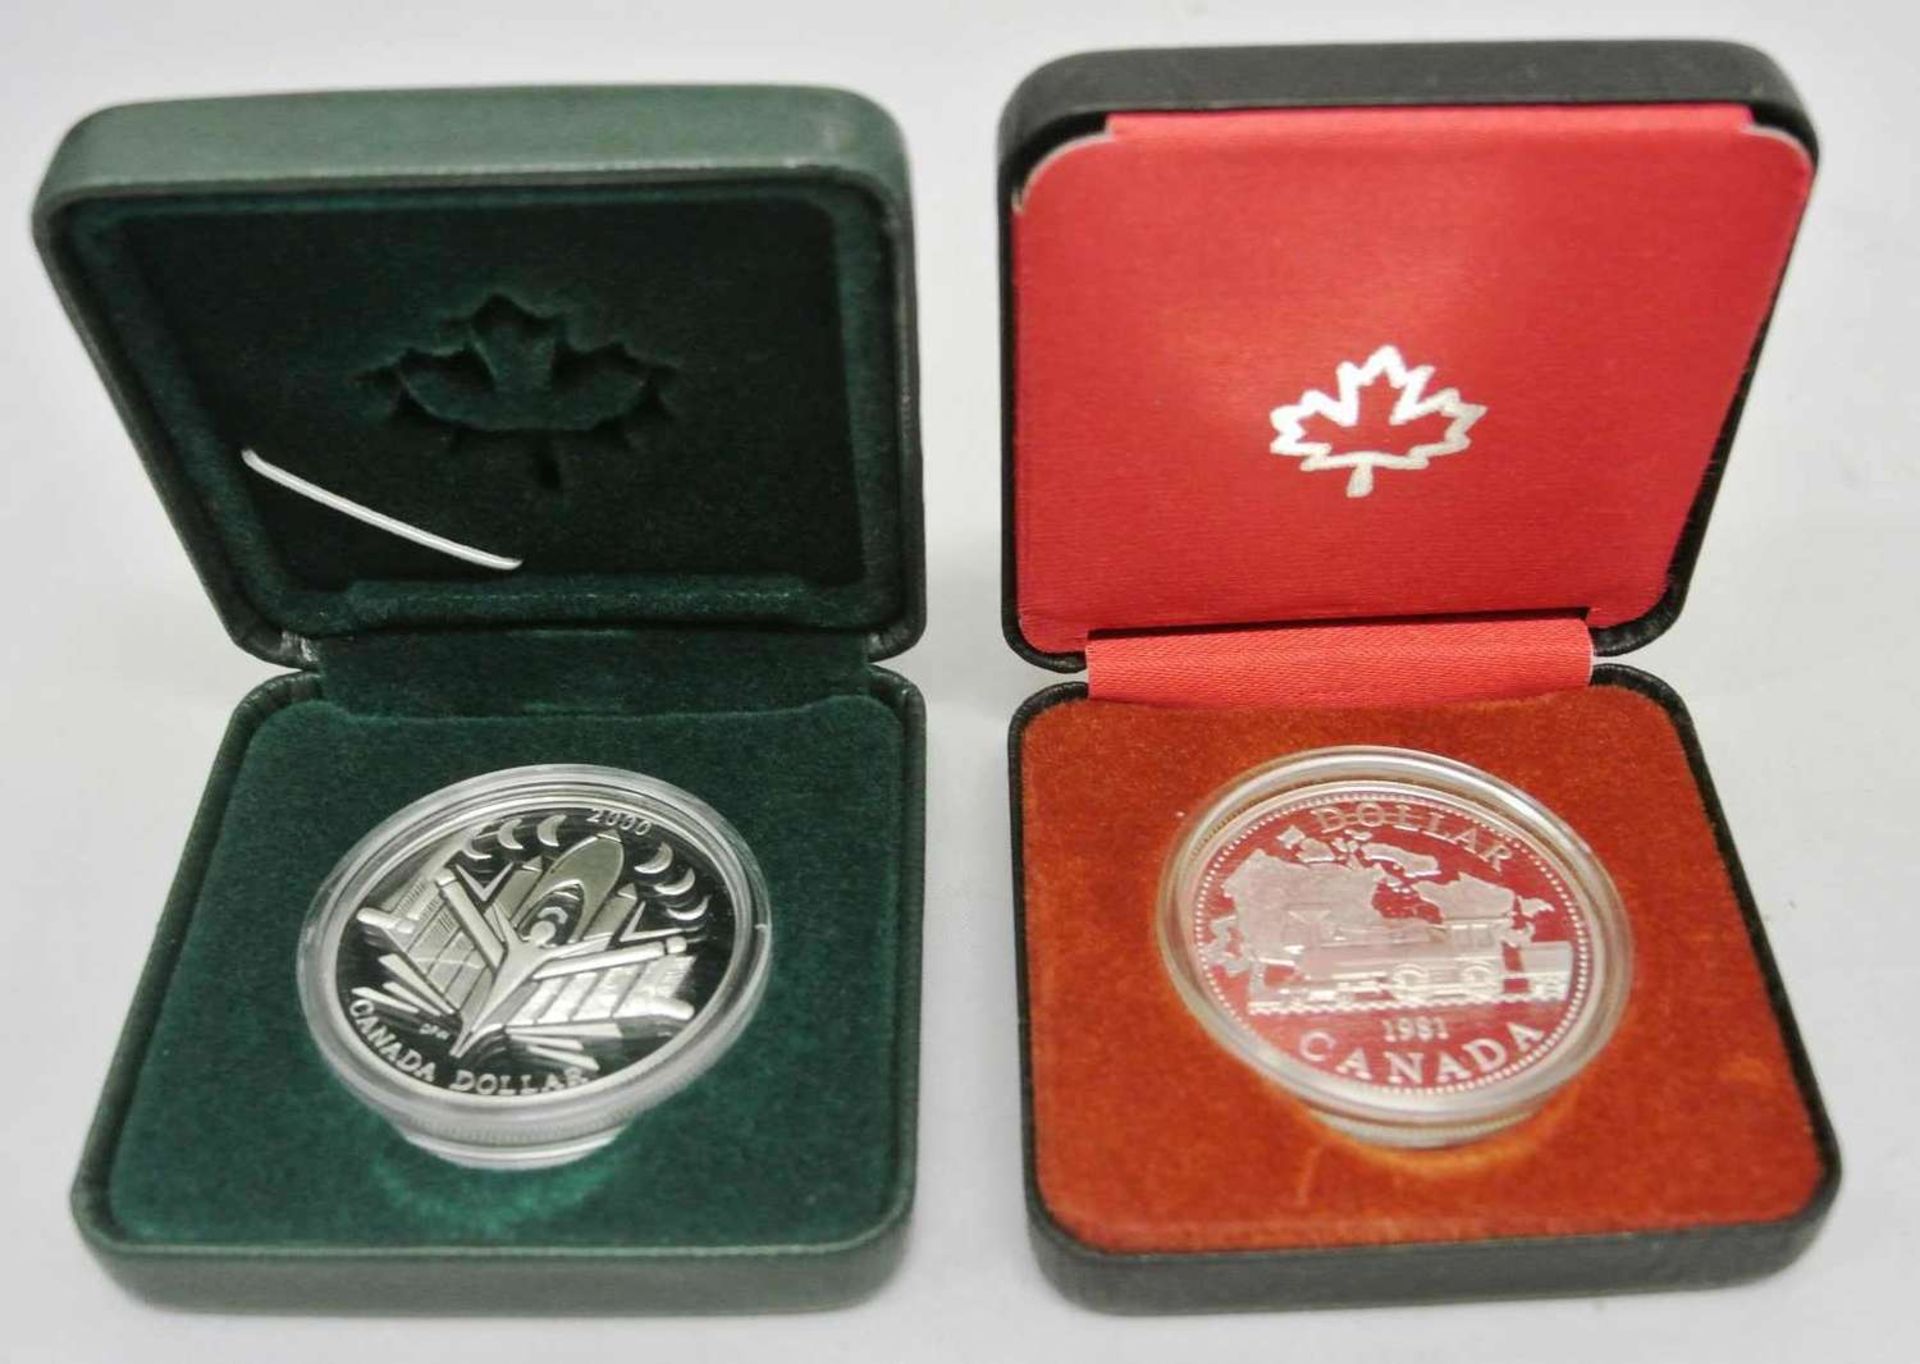 2x Canada Silberdollar, 1x Eisenbahn 1981, sowie 1x Voyage of Discovery 2000 in Original